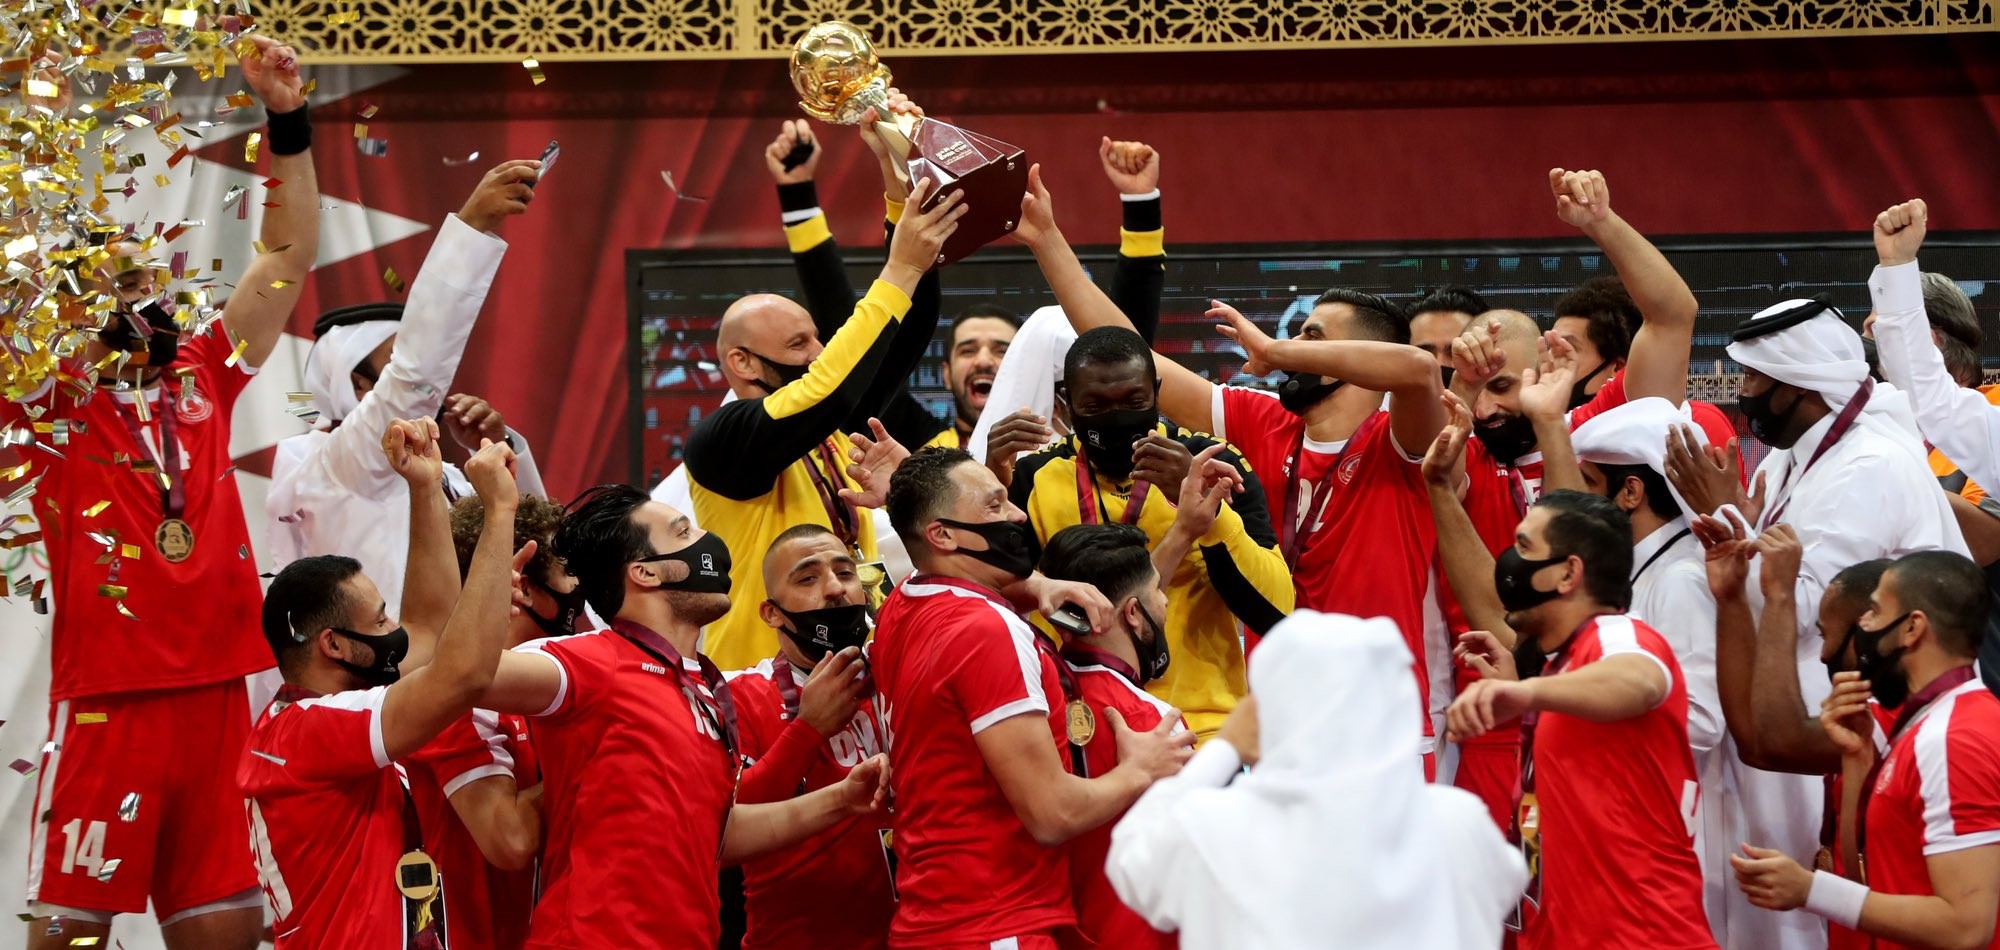 President of Qatar Handball Association Praises High Performance in Season